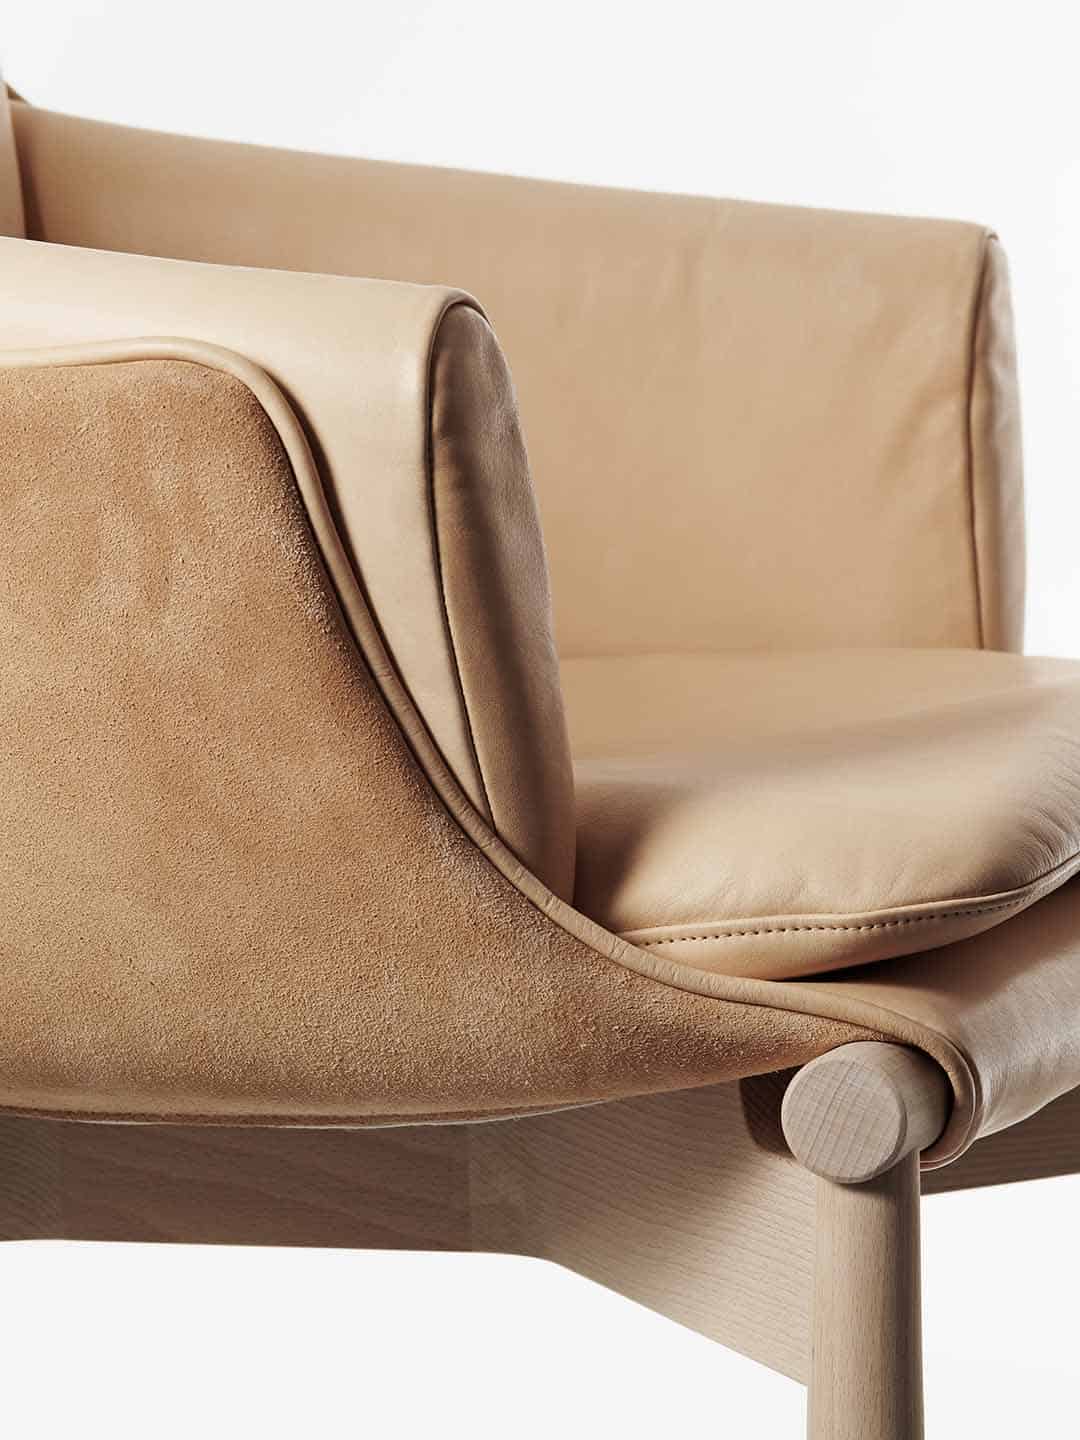 Красивое кресло Garsnas Viva коричневого цвета